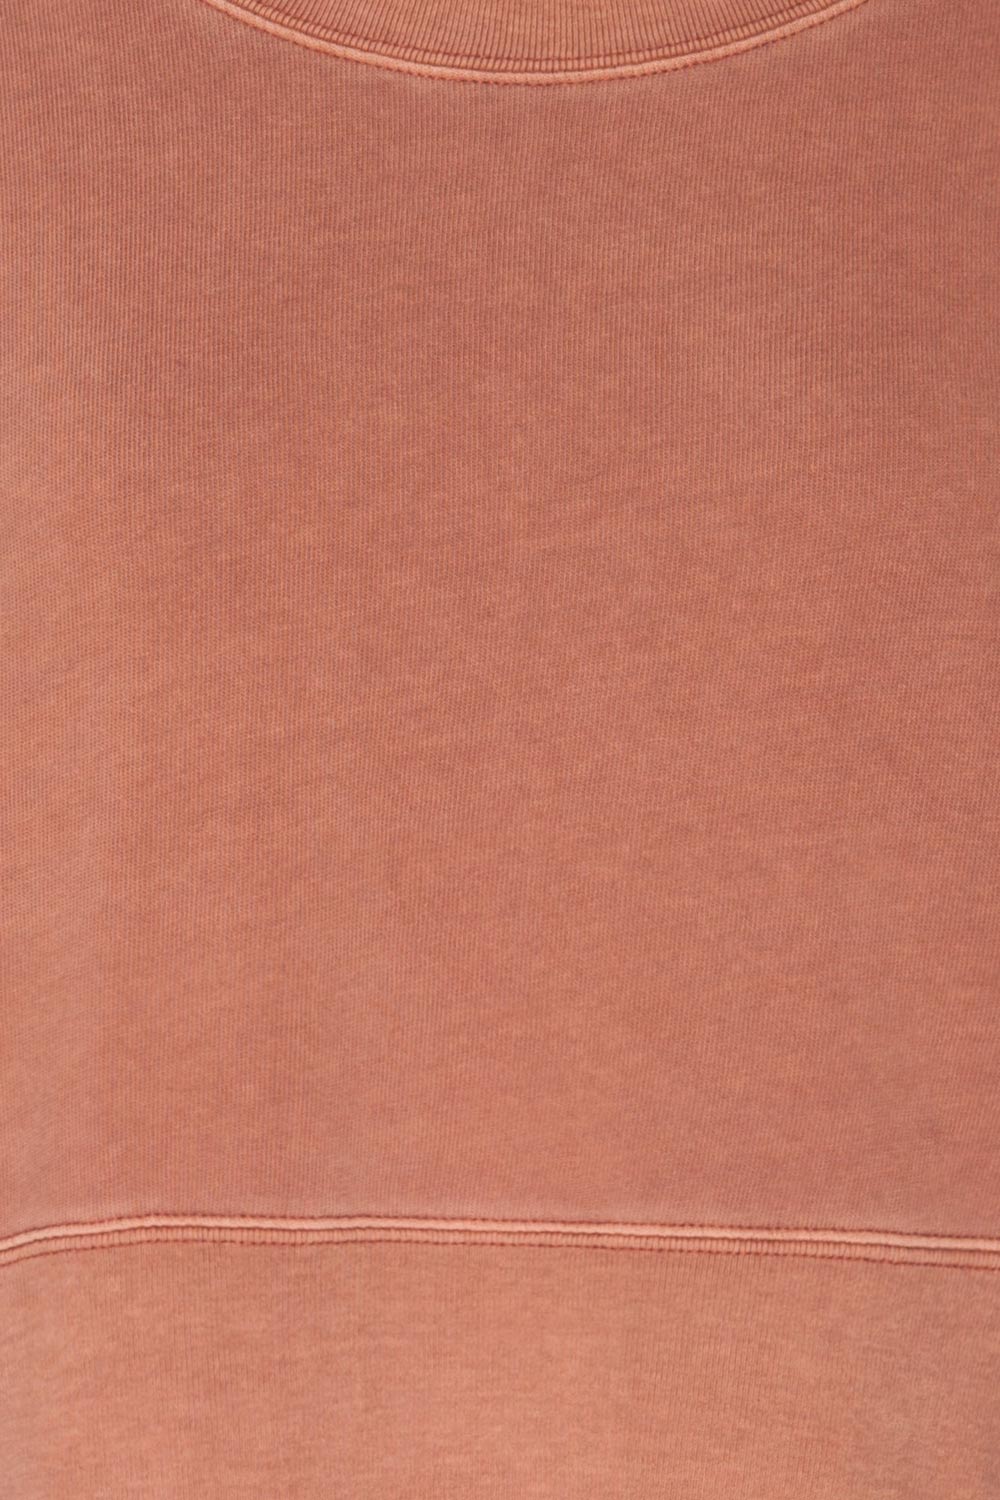  Cangil Pink Long Sleeved Crop Top | TEXTURE DETAIL | La Petite Garçonne